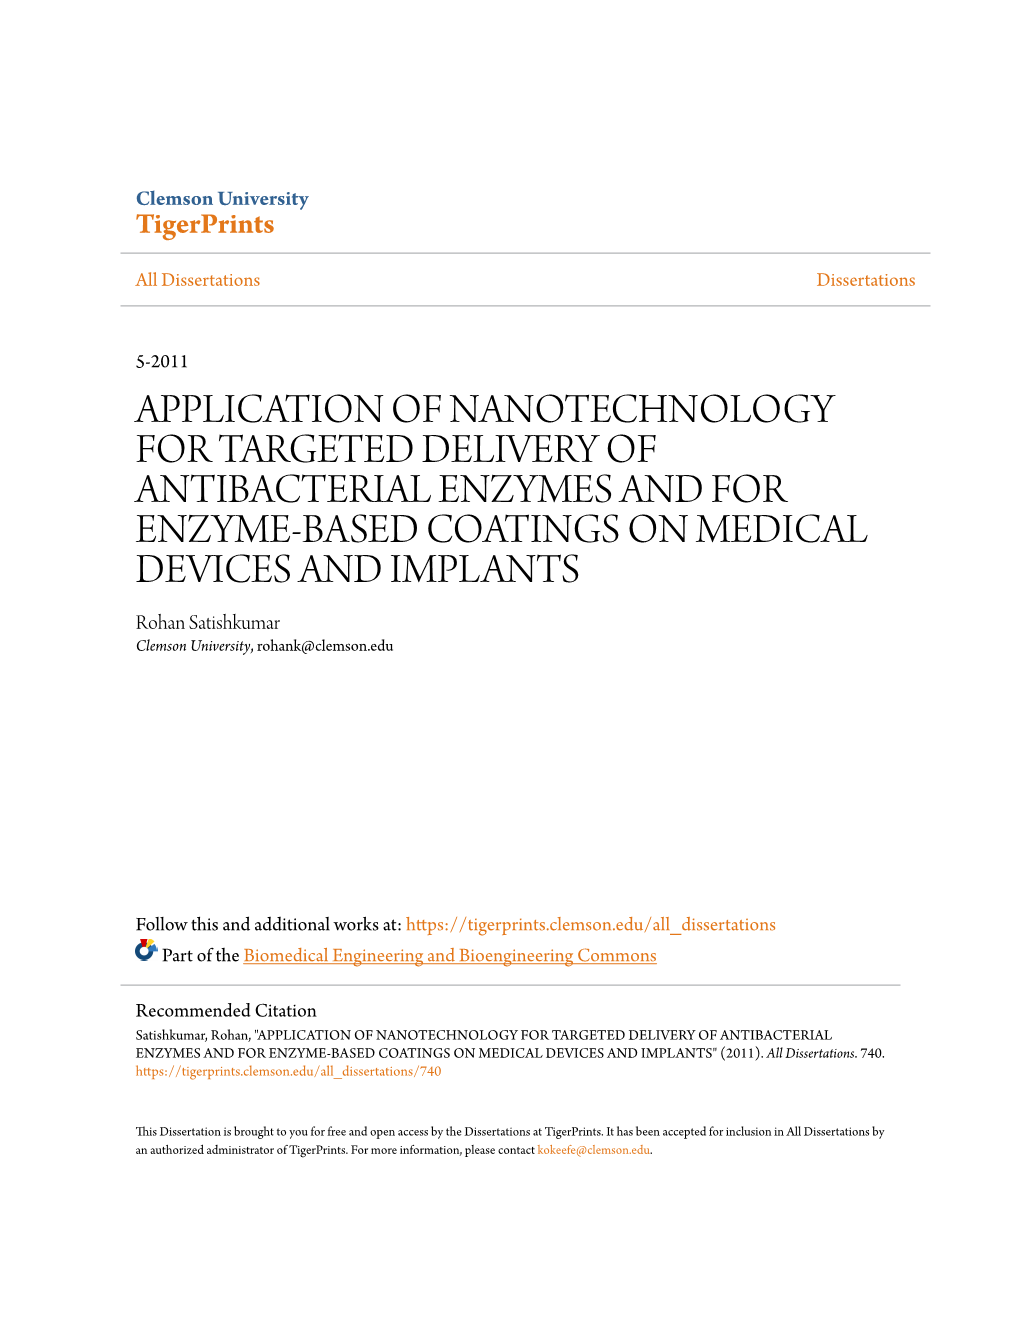 Application of Nanotechnology For